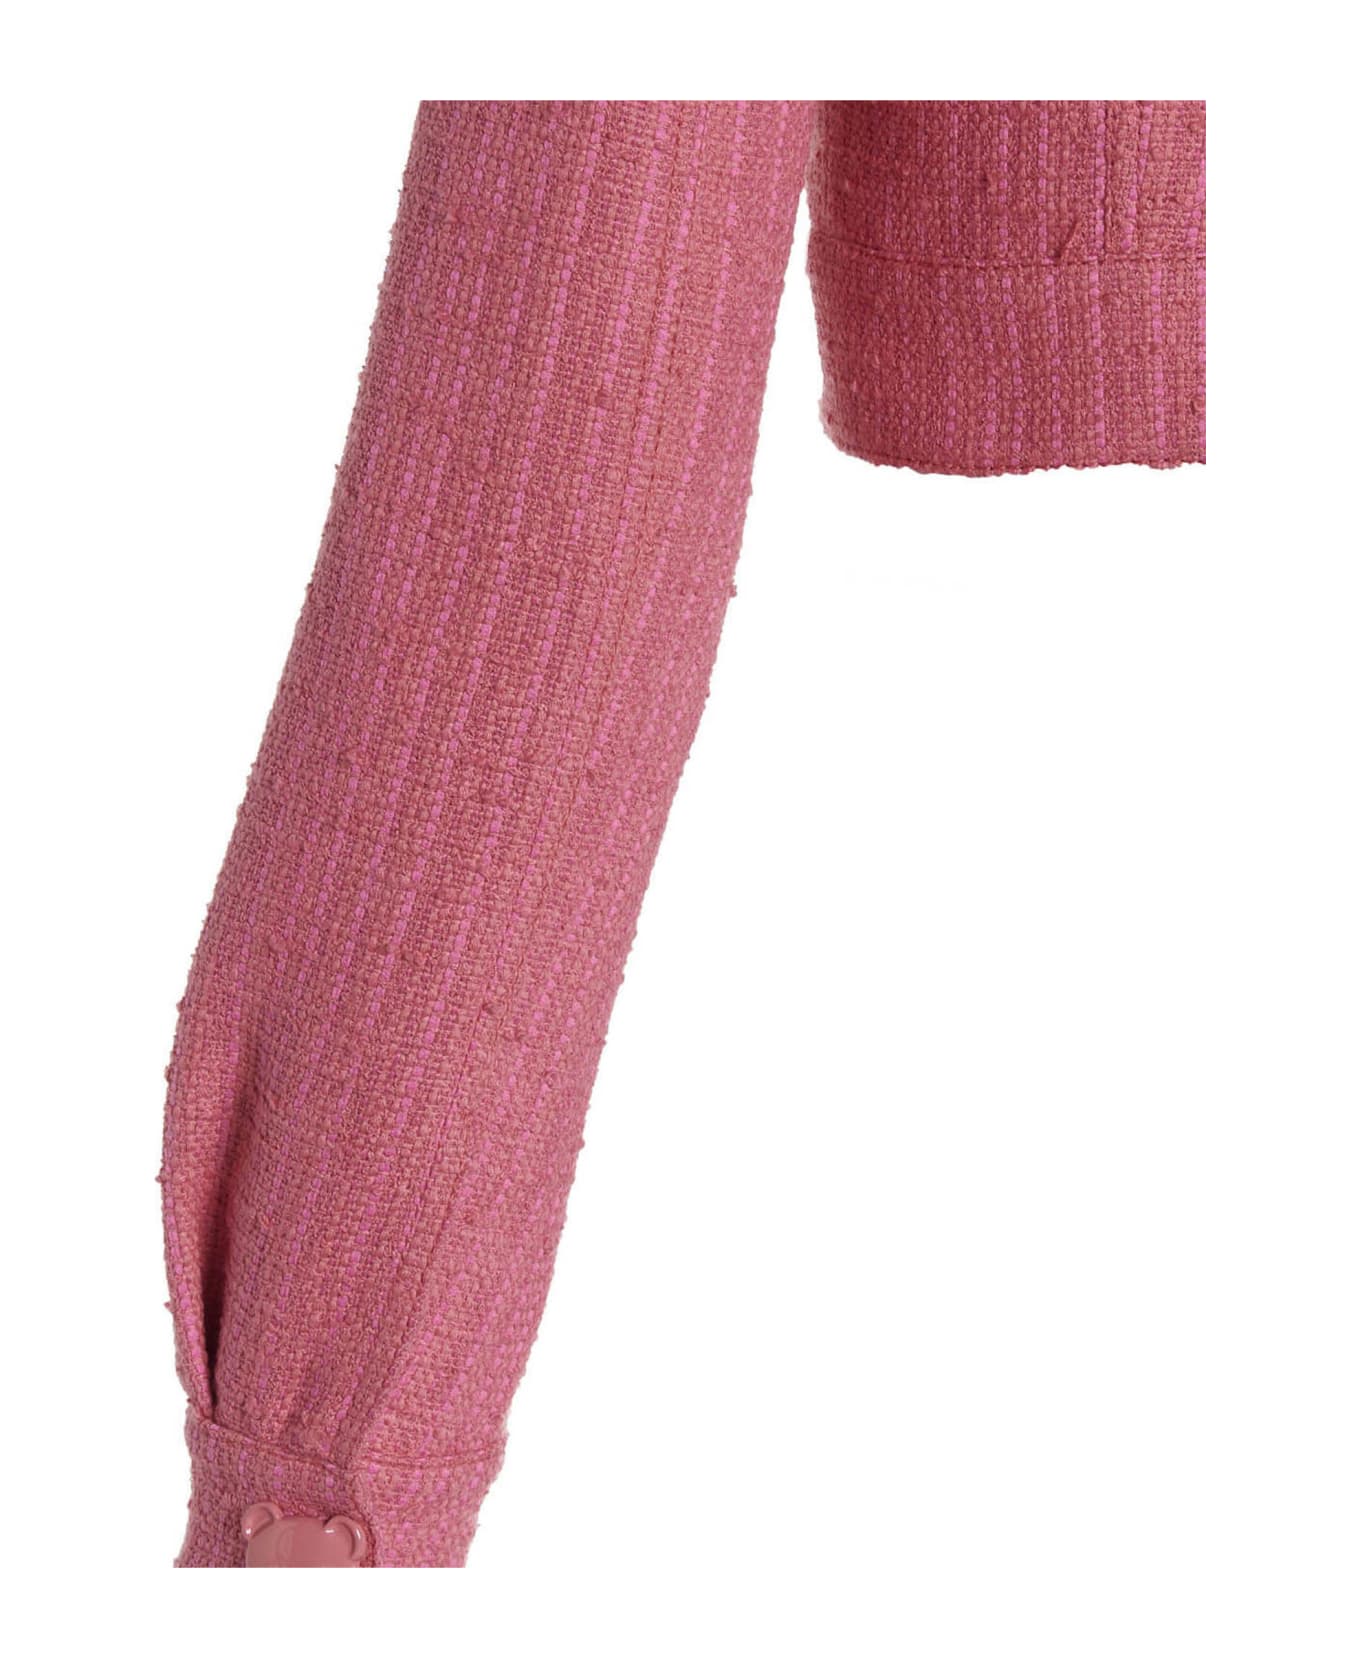 Moschino Tweed Cropped Jacket - Fuchsia ジャケット